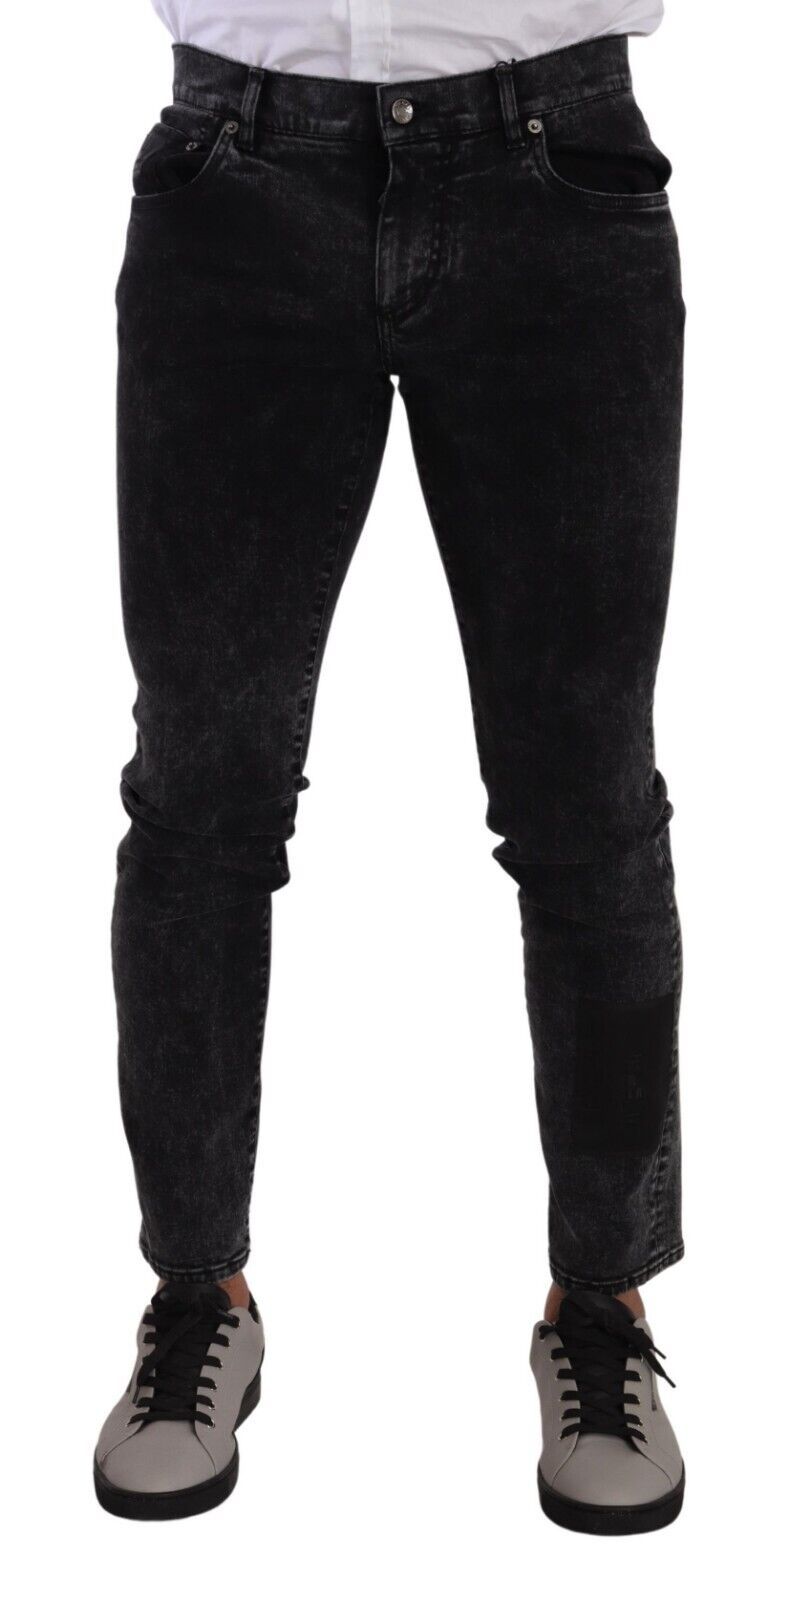 Black and Gray Dolce & Gabbana Black Cotton Stretch Skinny Denim Trouser Jeans